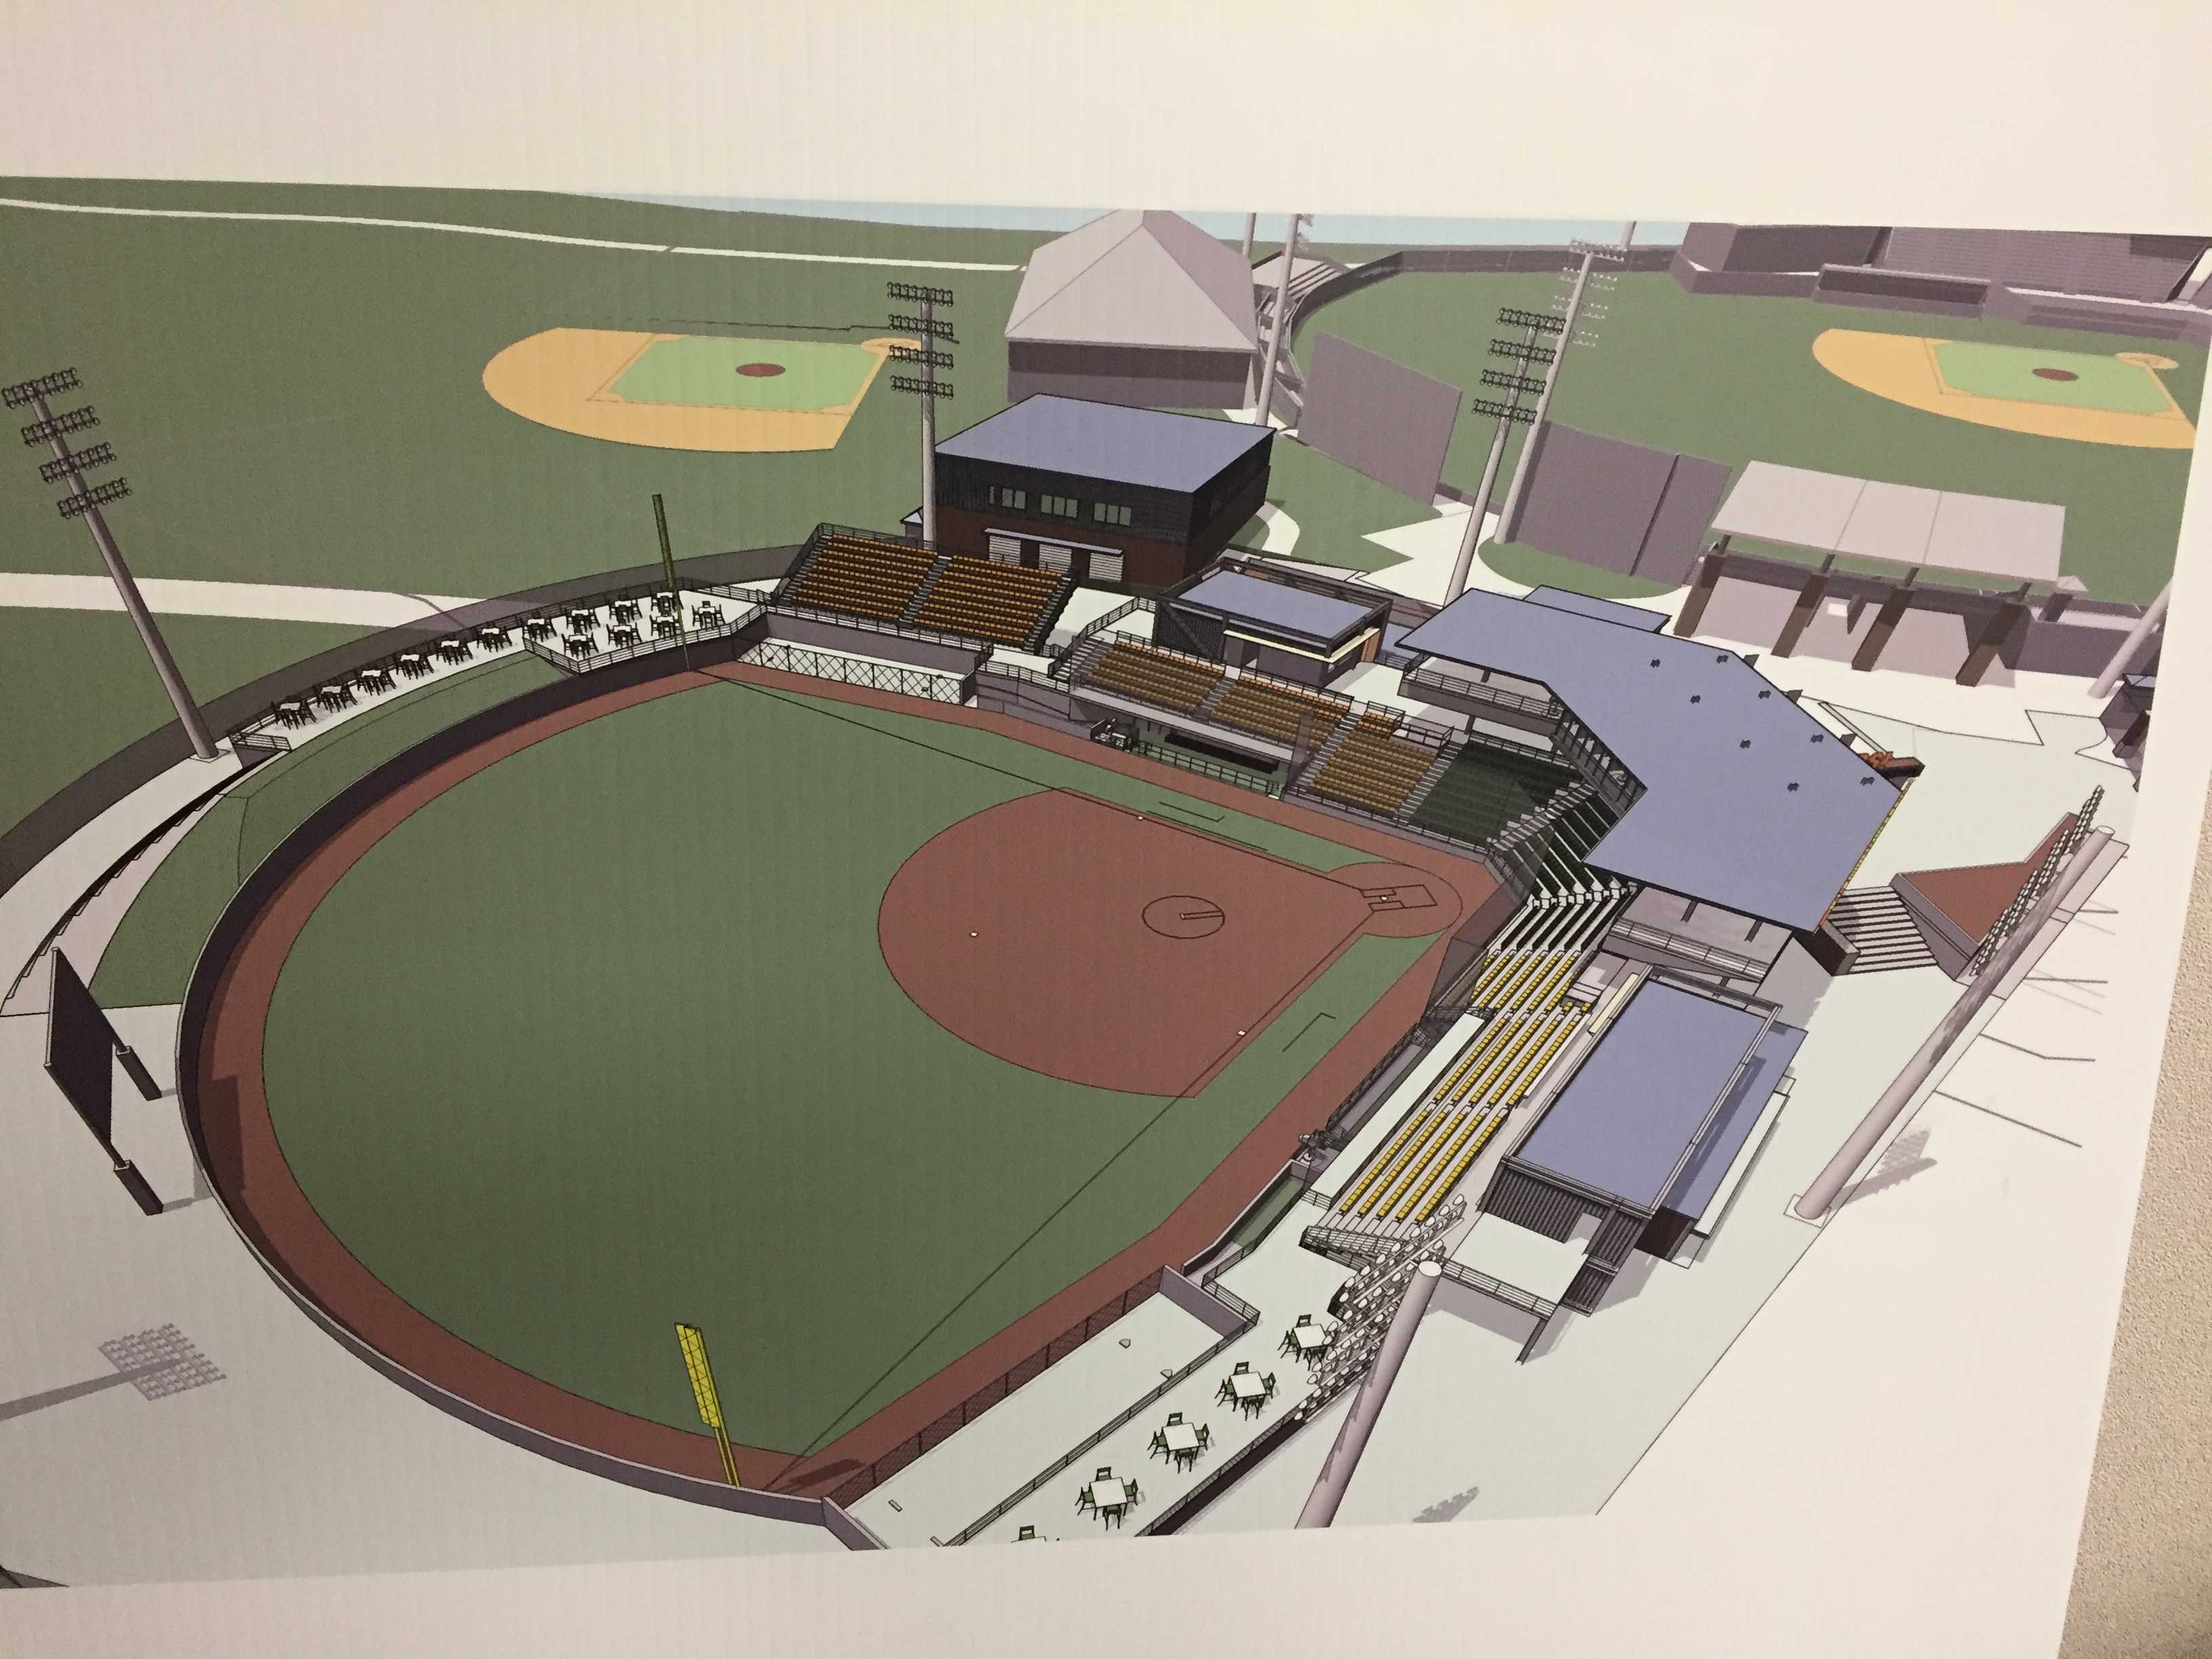 Clemson hires first ever softball coach, new stadium plans revealed